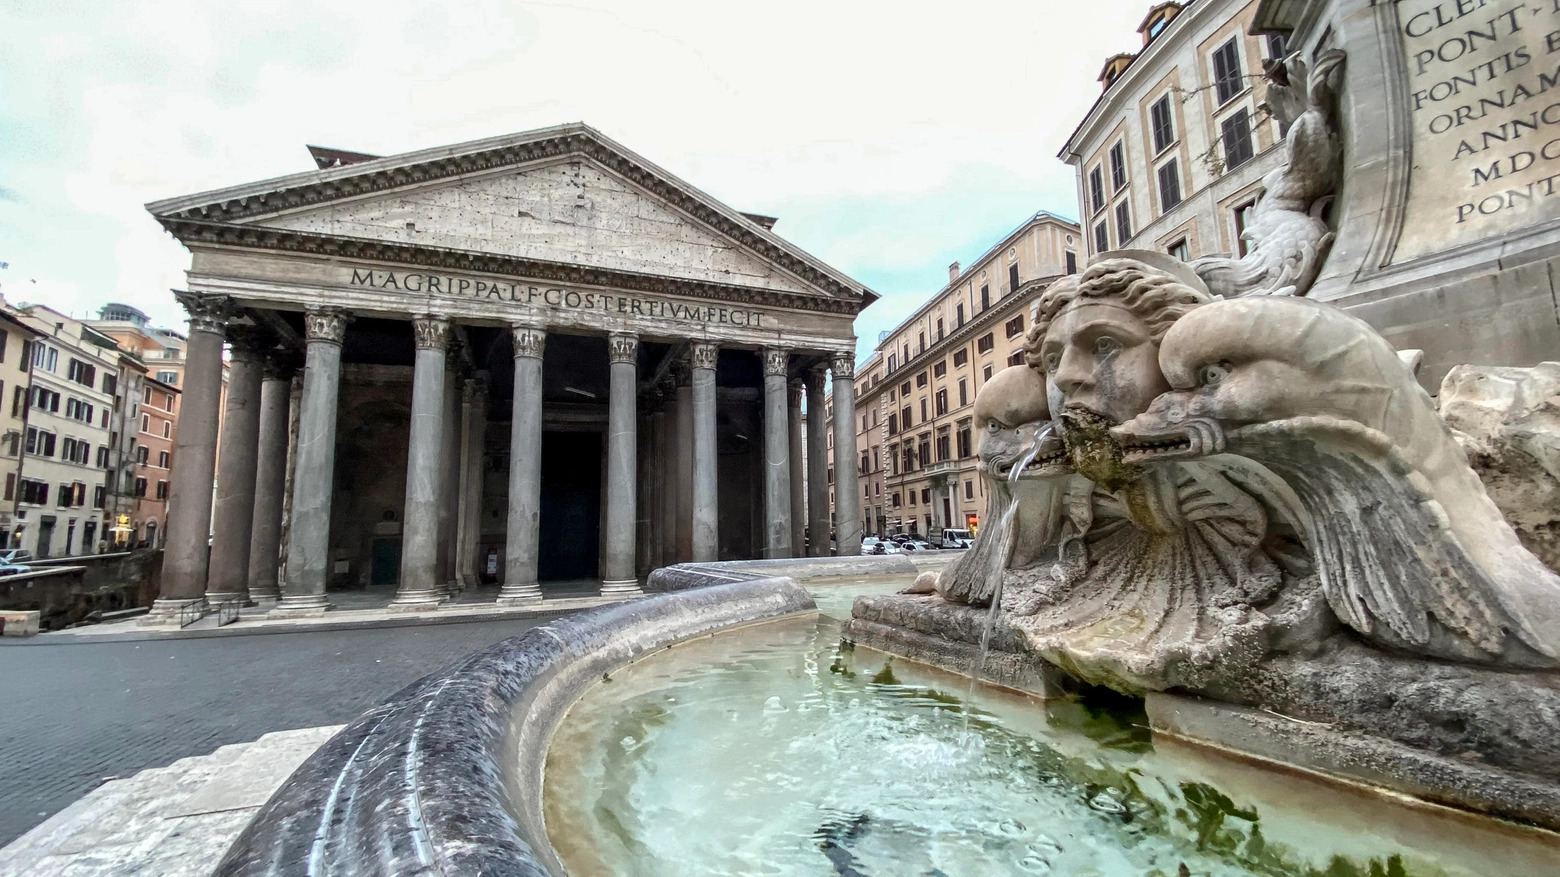 Il Pantheon e la fontana in piazza del Pantheon, Roma